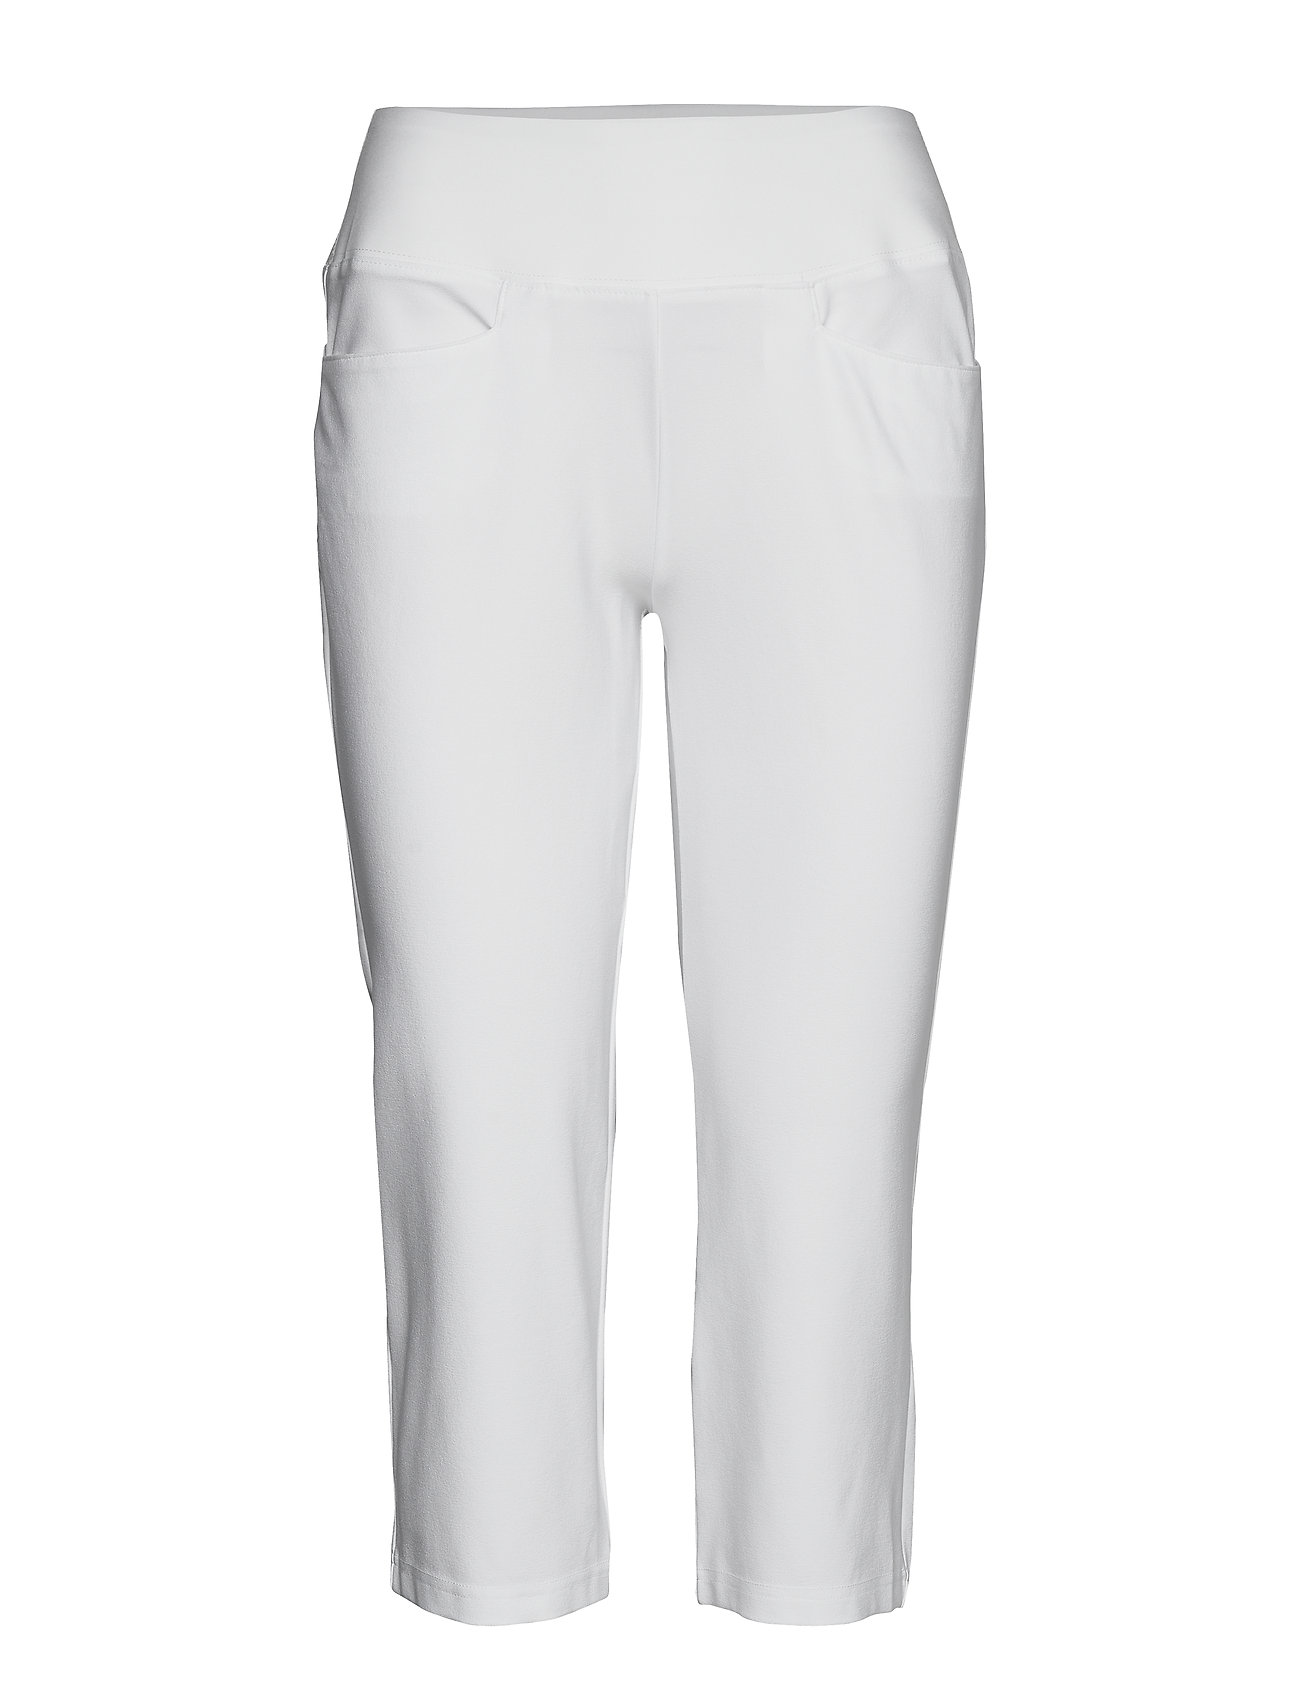 Pwrshape Capri Sport Pants Hvid PUMA Golf bukser fra PUMA Golf til dame Sort - Pashion.dk